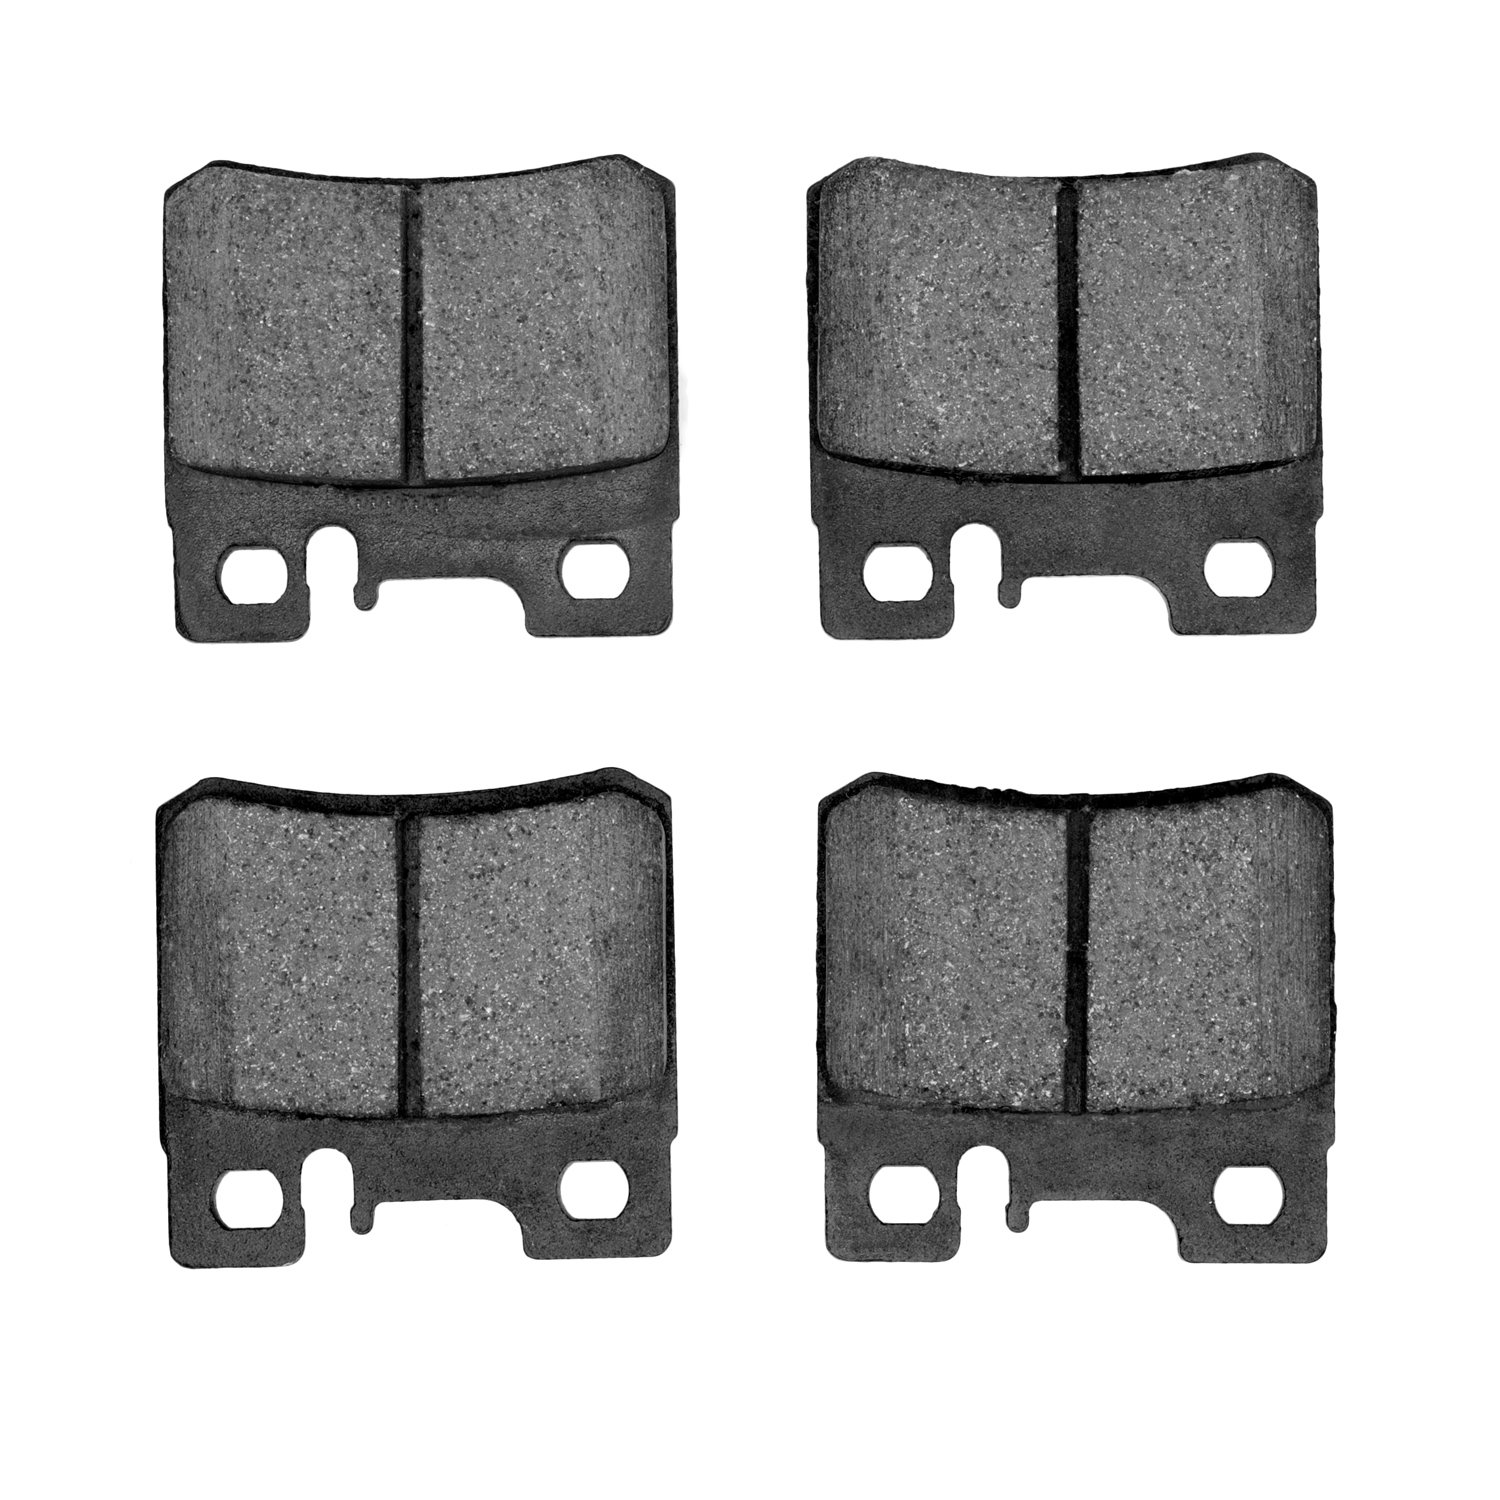 1600-0495-00 5000 Euro Ceramic Brake Pads, 1987-2000 Multiple Makes/Models, Position: Rear